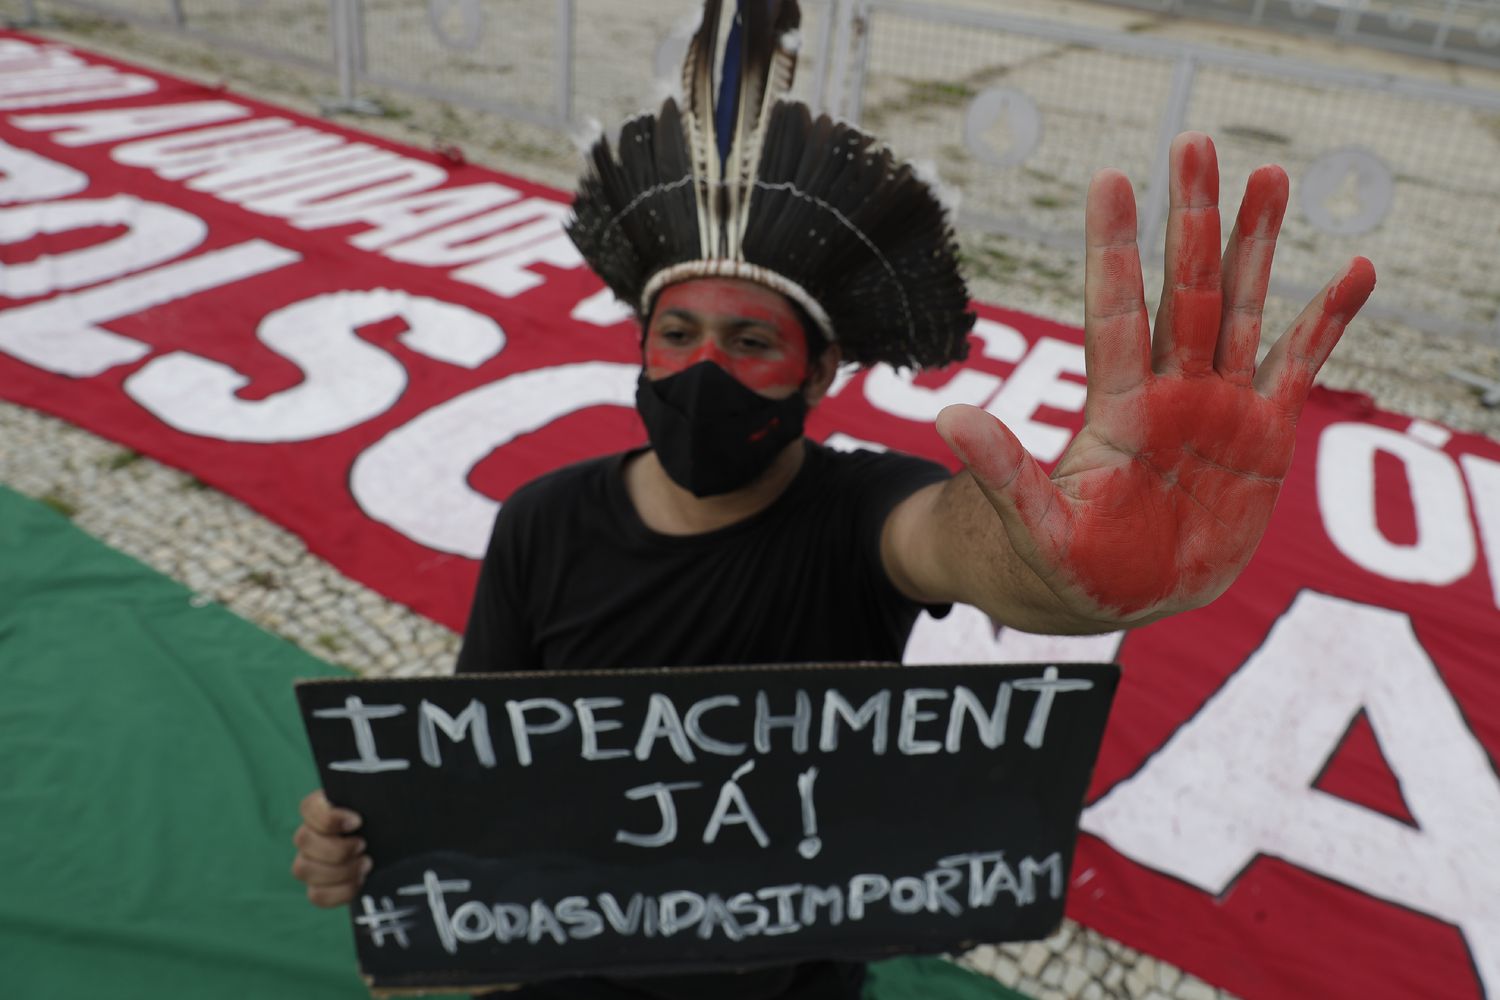 Manifestante protesta contra o presidente Jair Bolsonaro na frente do Planalto, no último sábado.